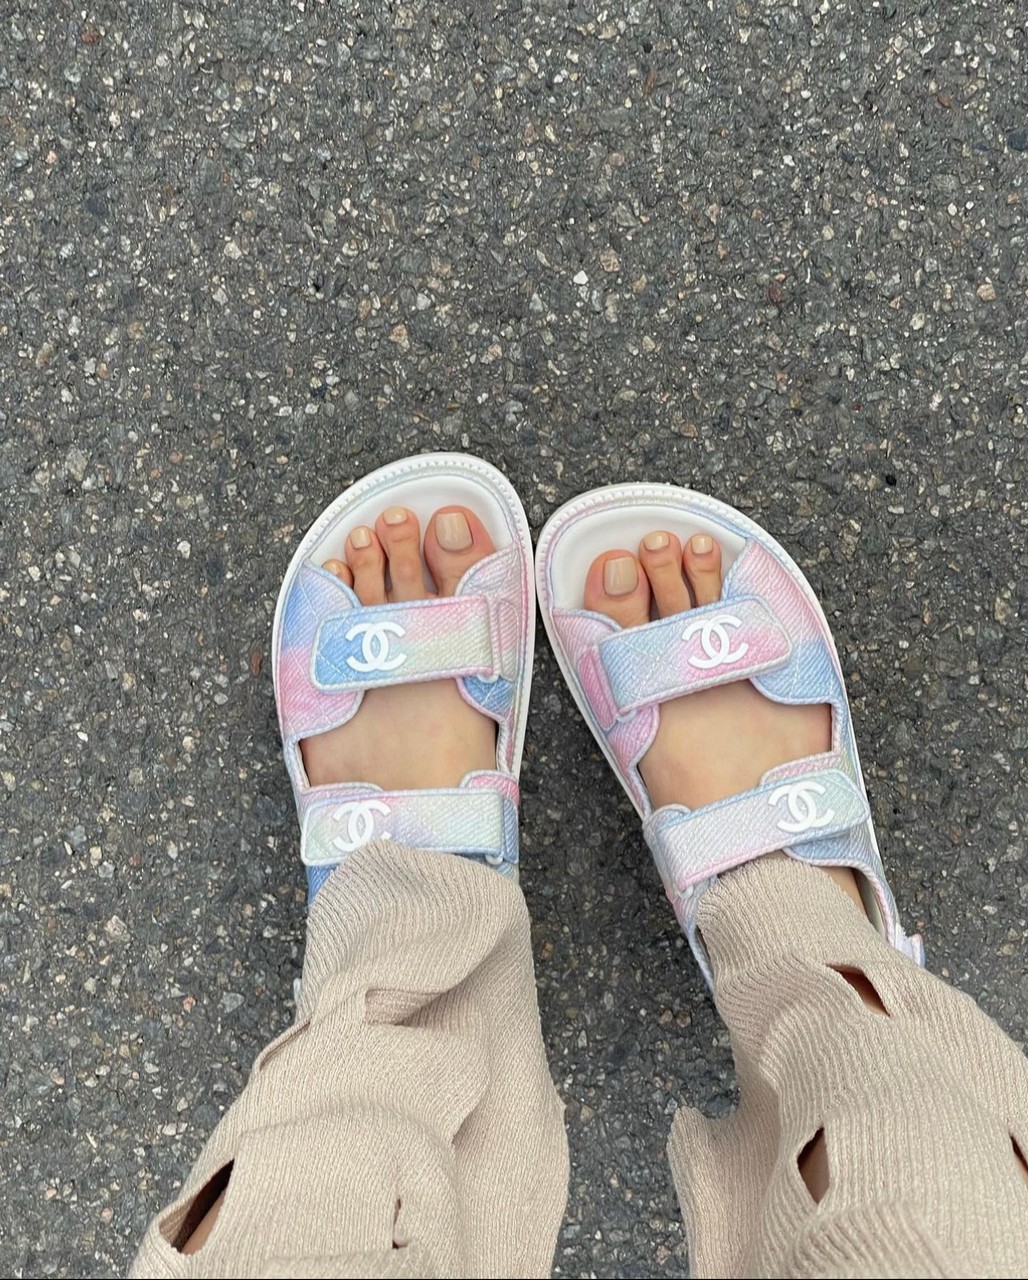 Irene Kim Feet